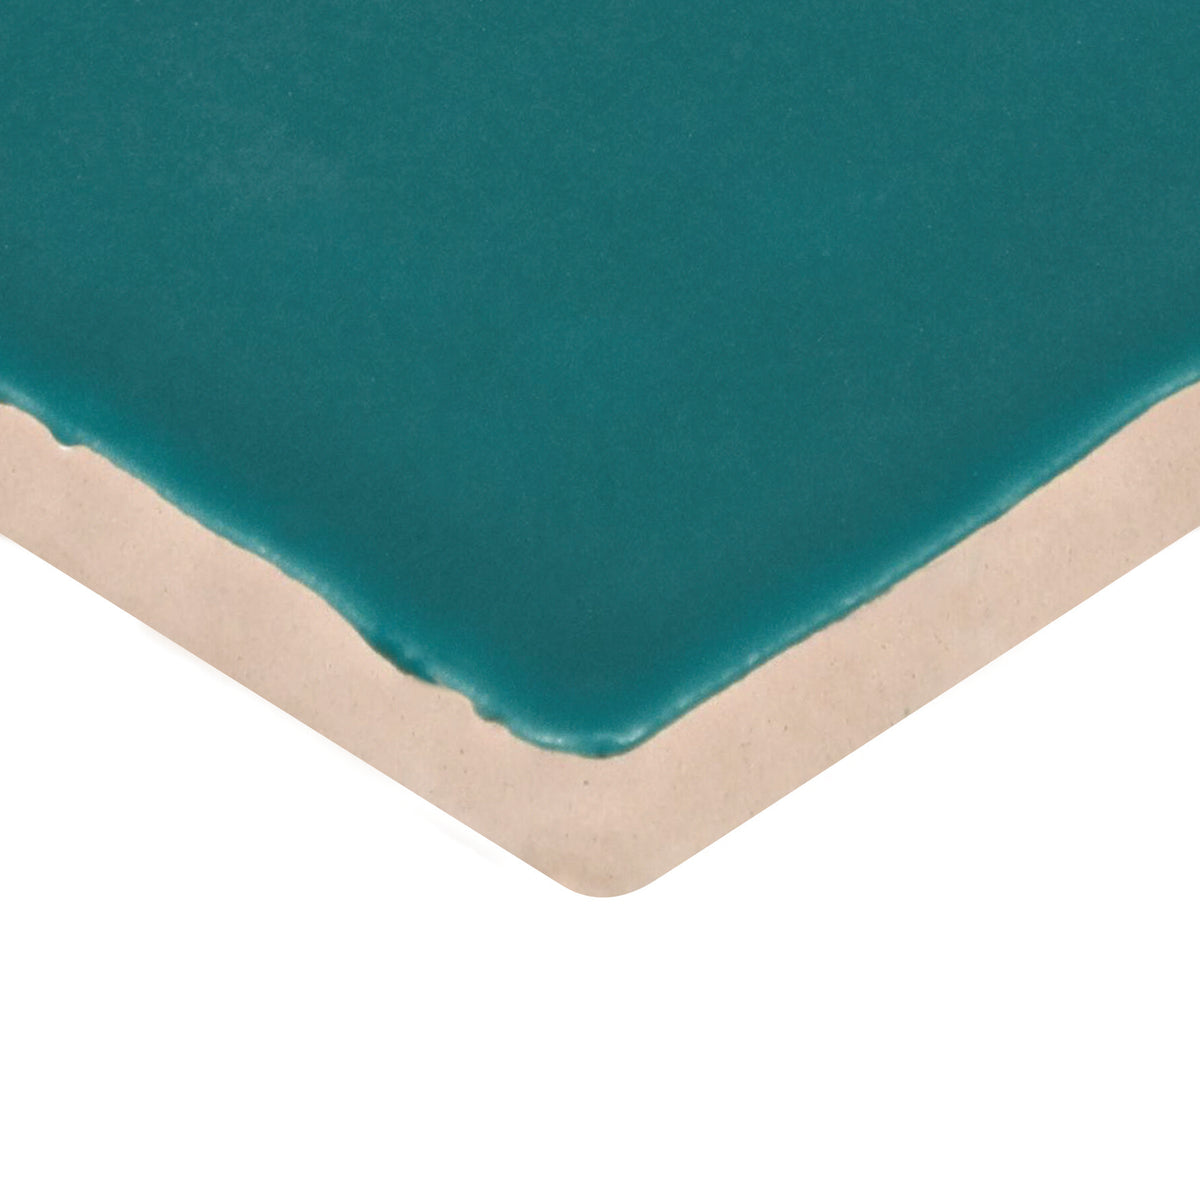 Daltile - Farrier - 2.5 in. x 5 in. Glazed Ceramic Wall Tile - Blue Roan Edge View